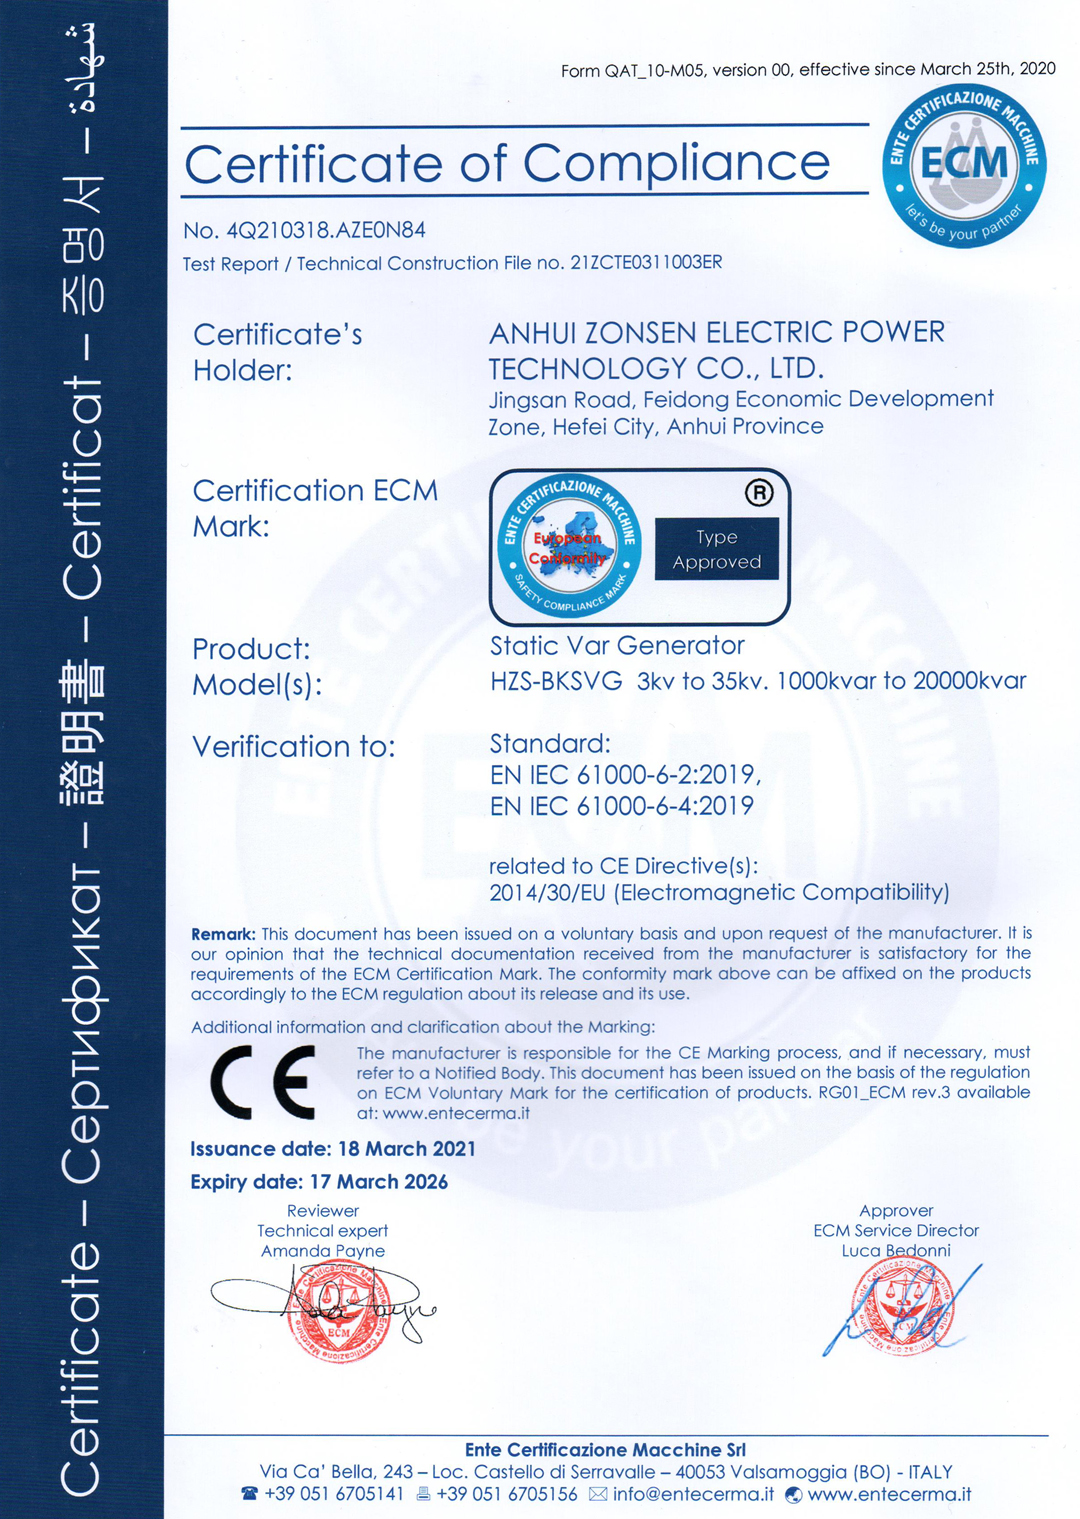 ECM SVG Certification